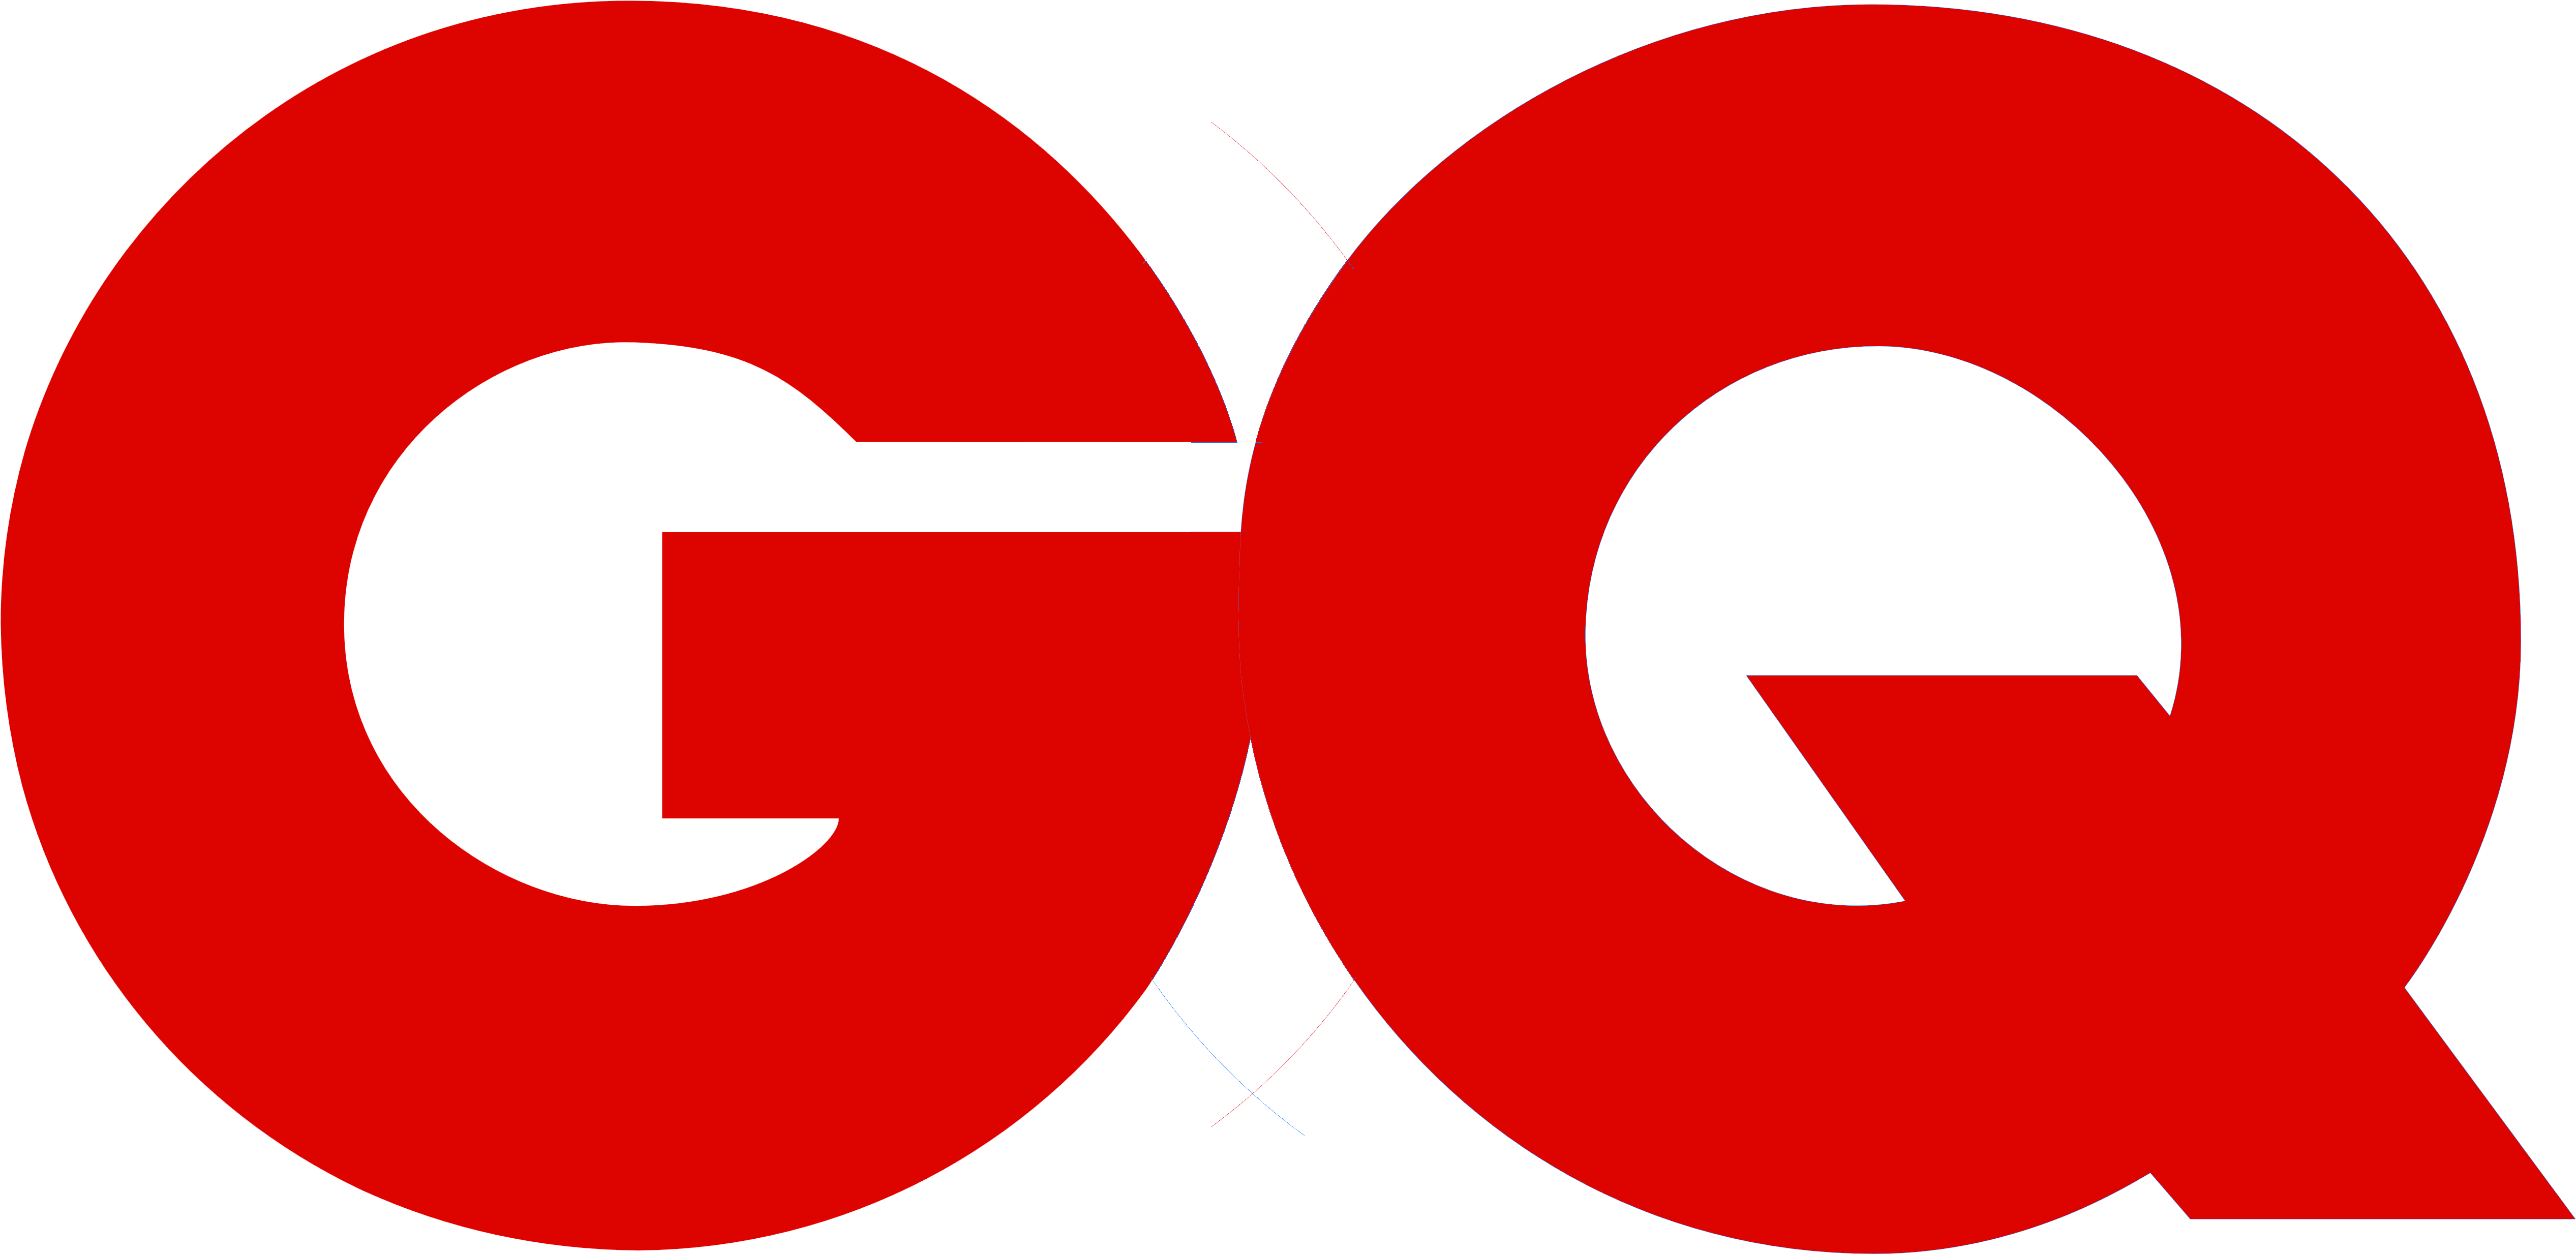 GQ UK Logo - Download Gq Logo - Gq Magazine, U.k. Version PNG Image with No ...